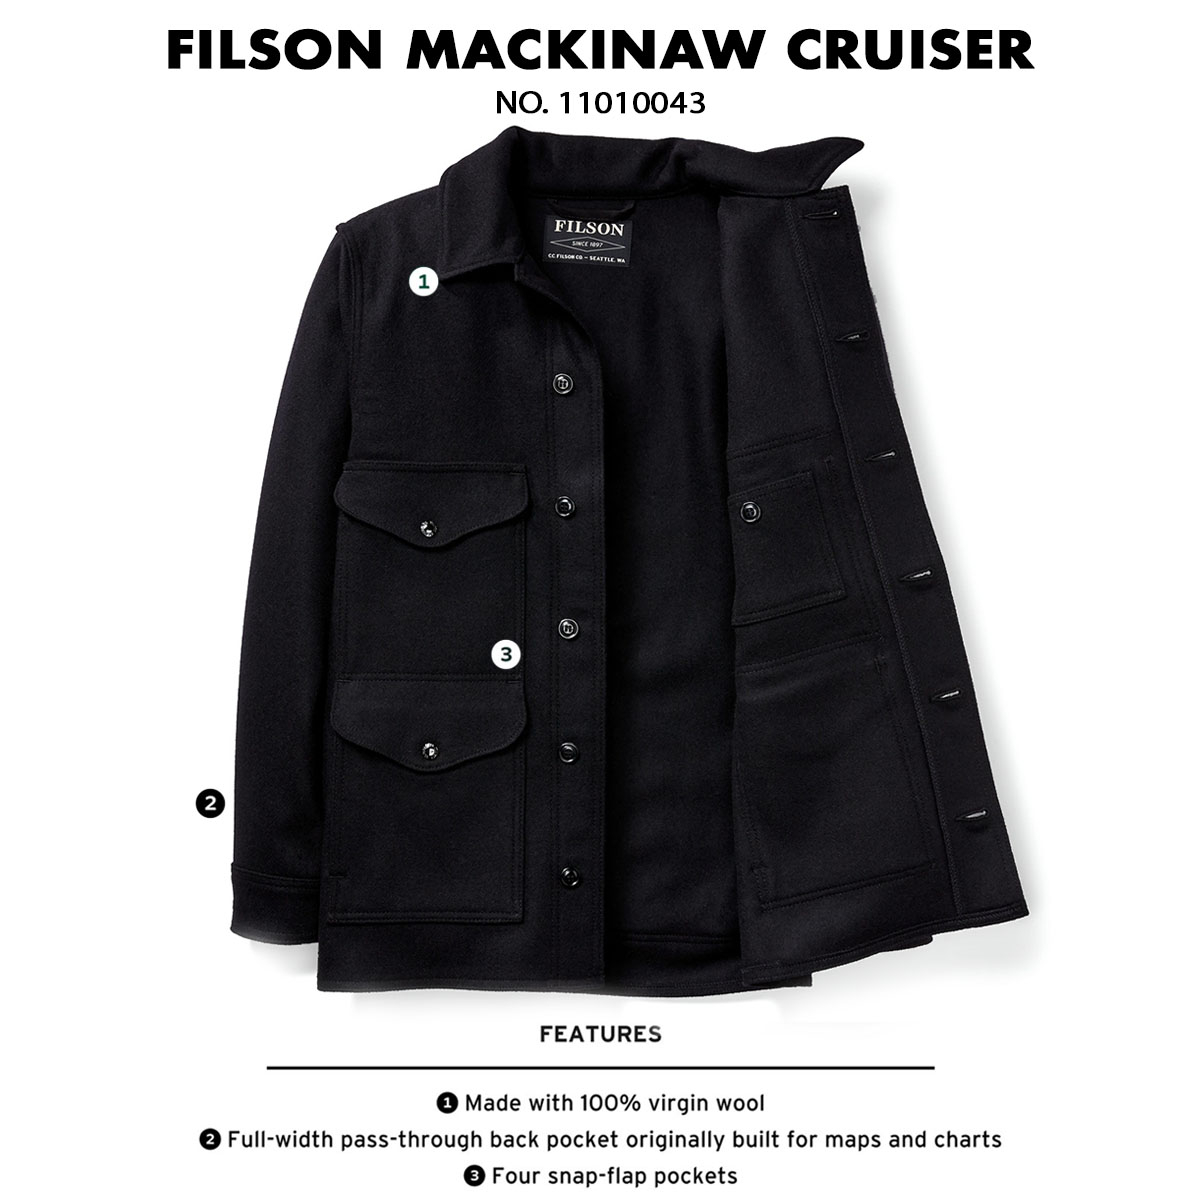 Filson Mackinaw Cruiser Wool Dark Navy 11010043, features